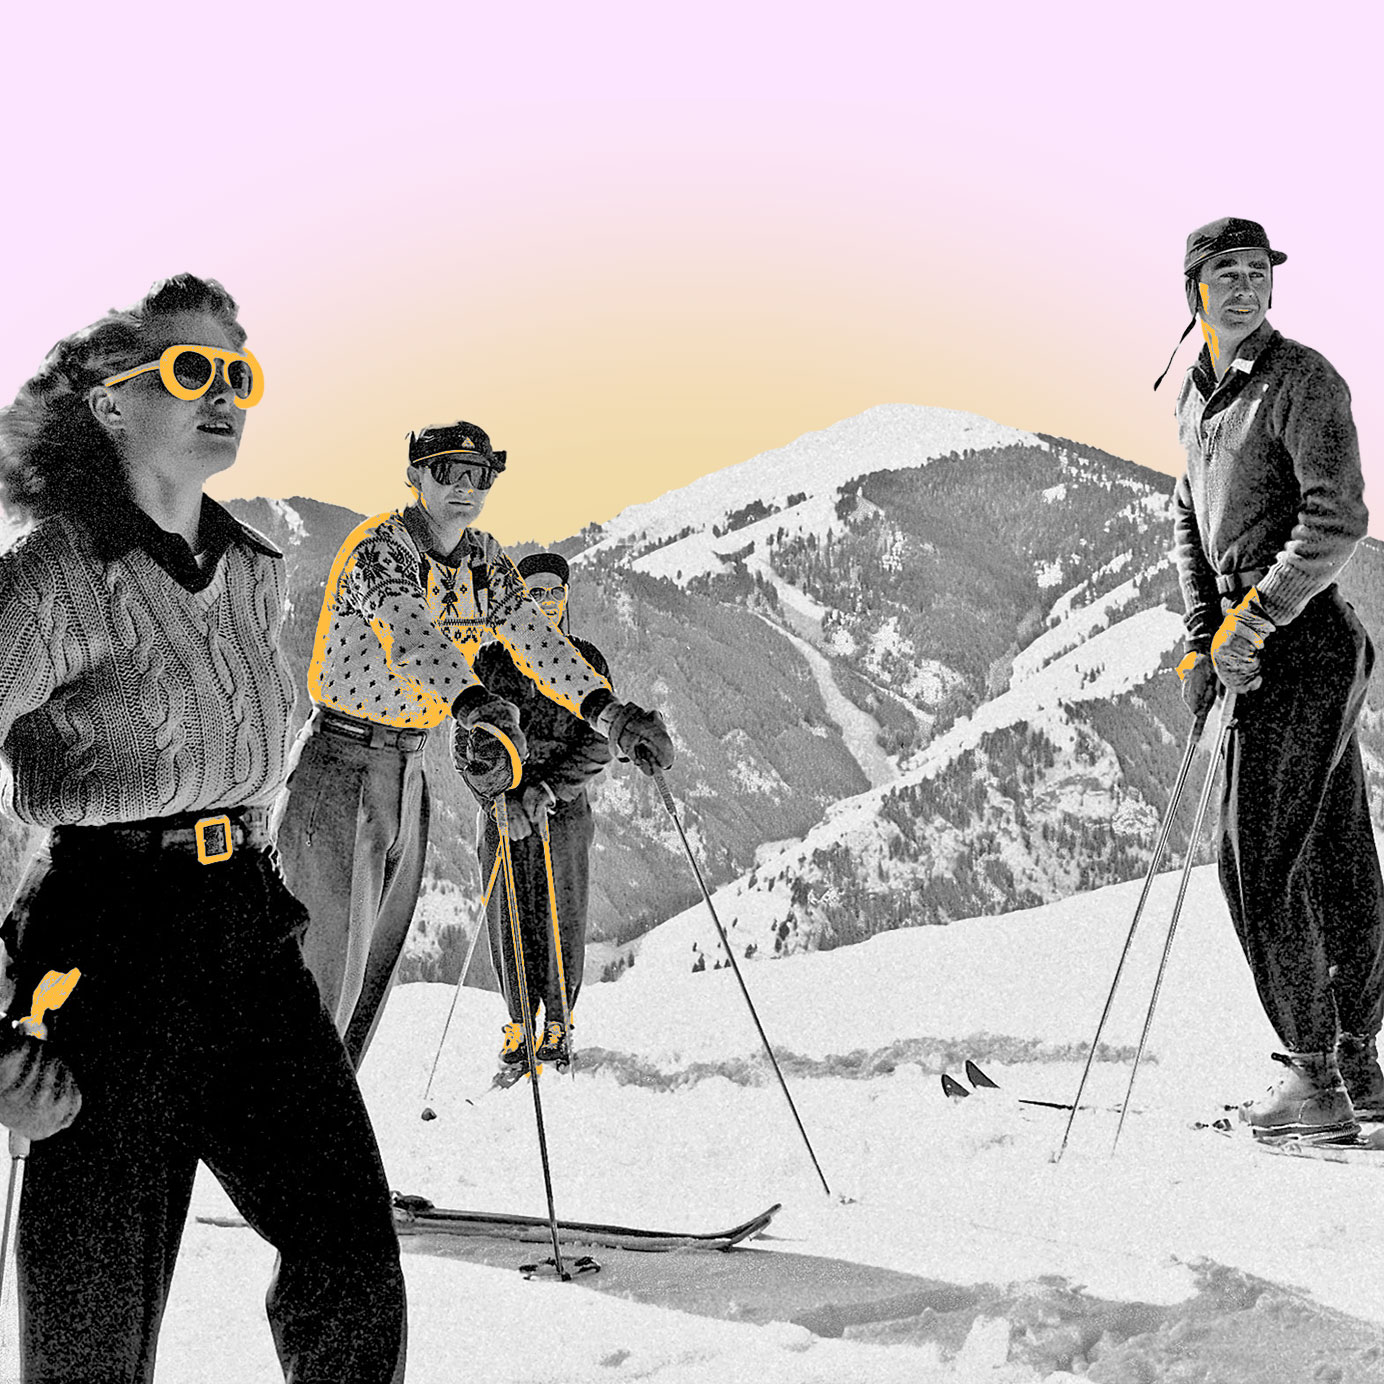 The best ski wear for apres ski or hitting the slopes